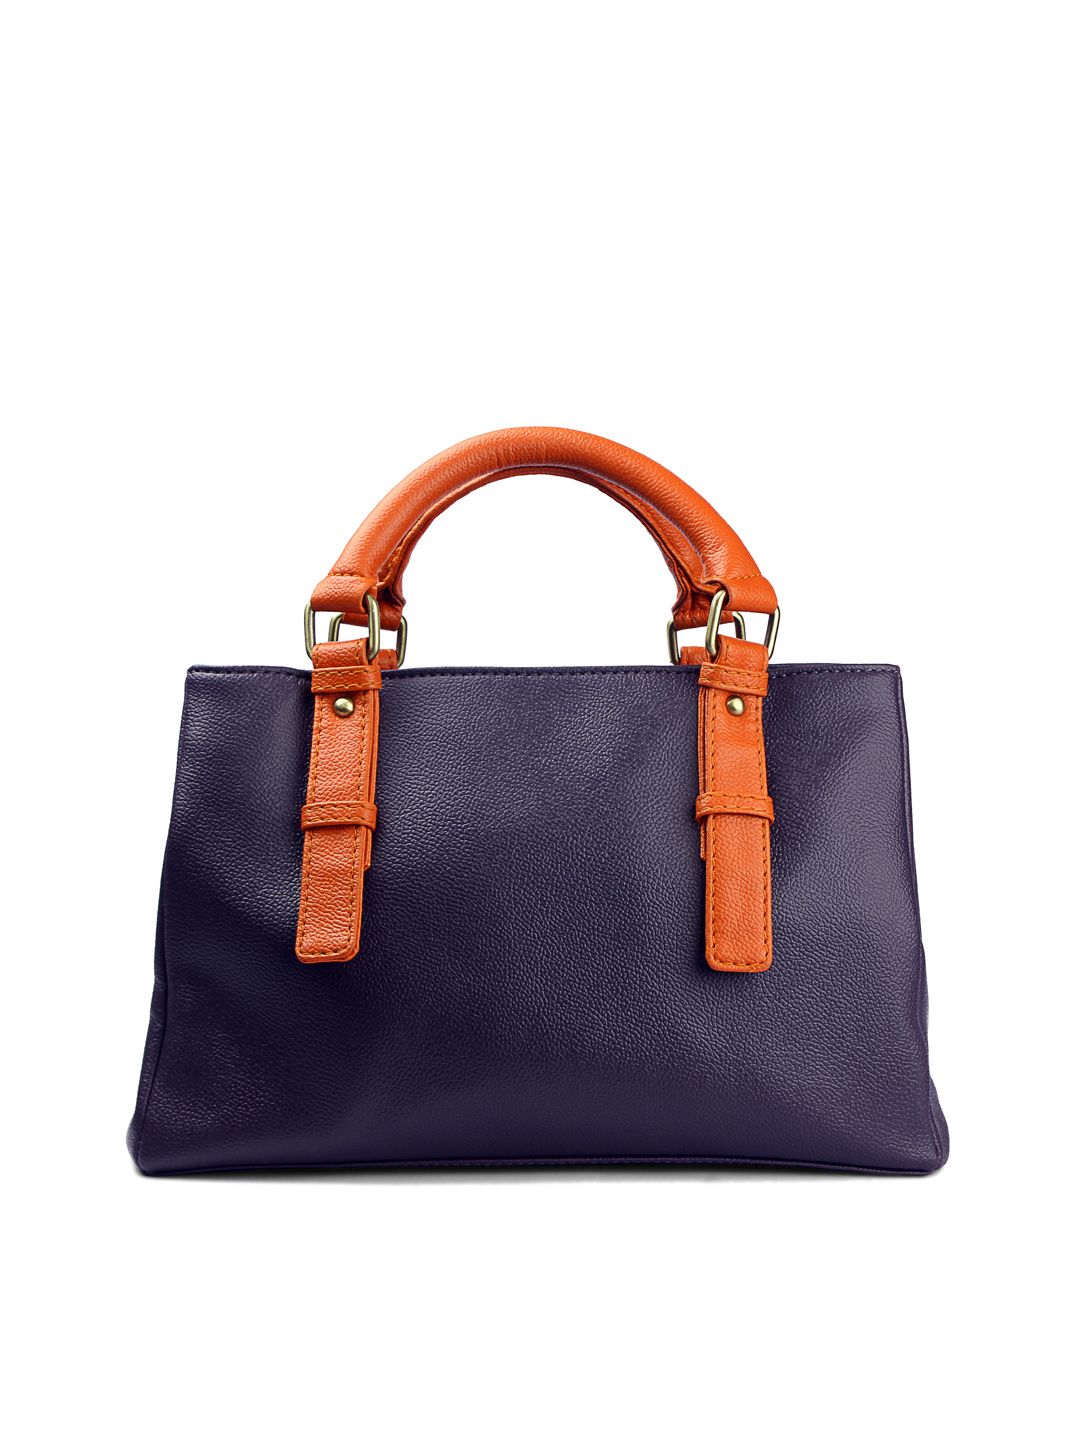 myntra ladies handbags